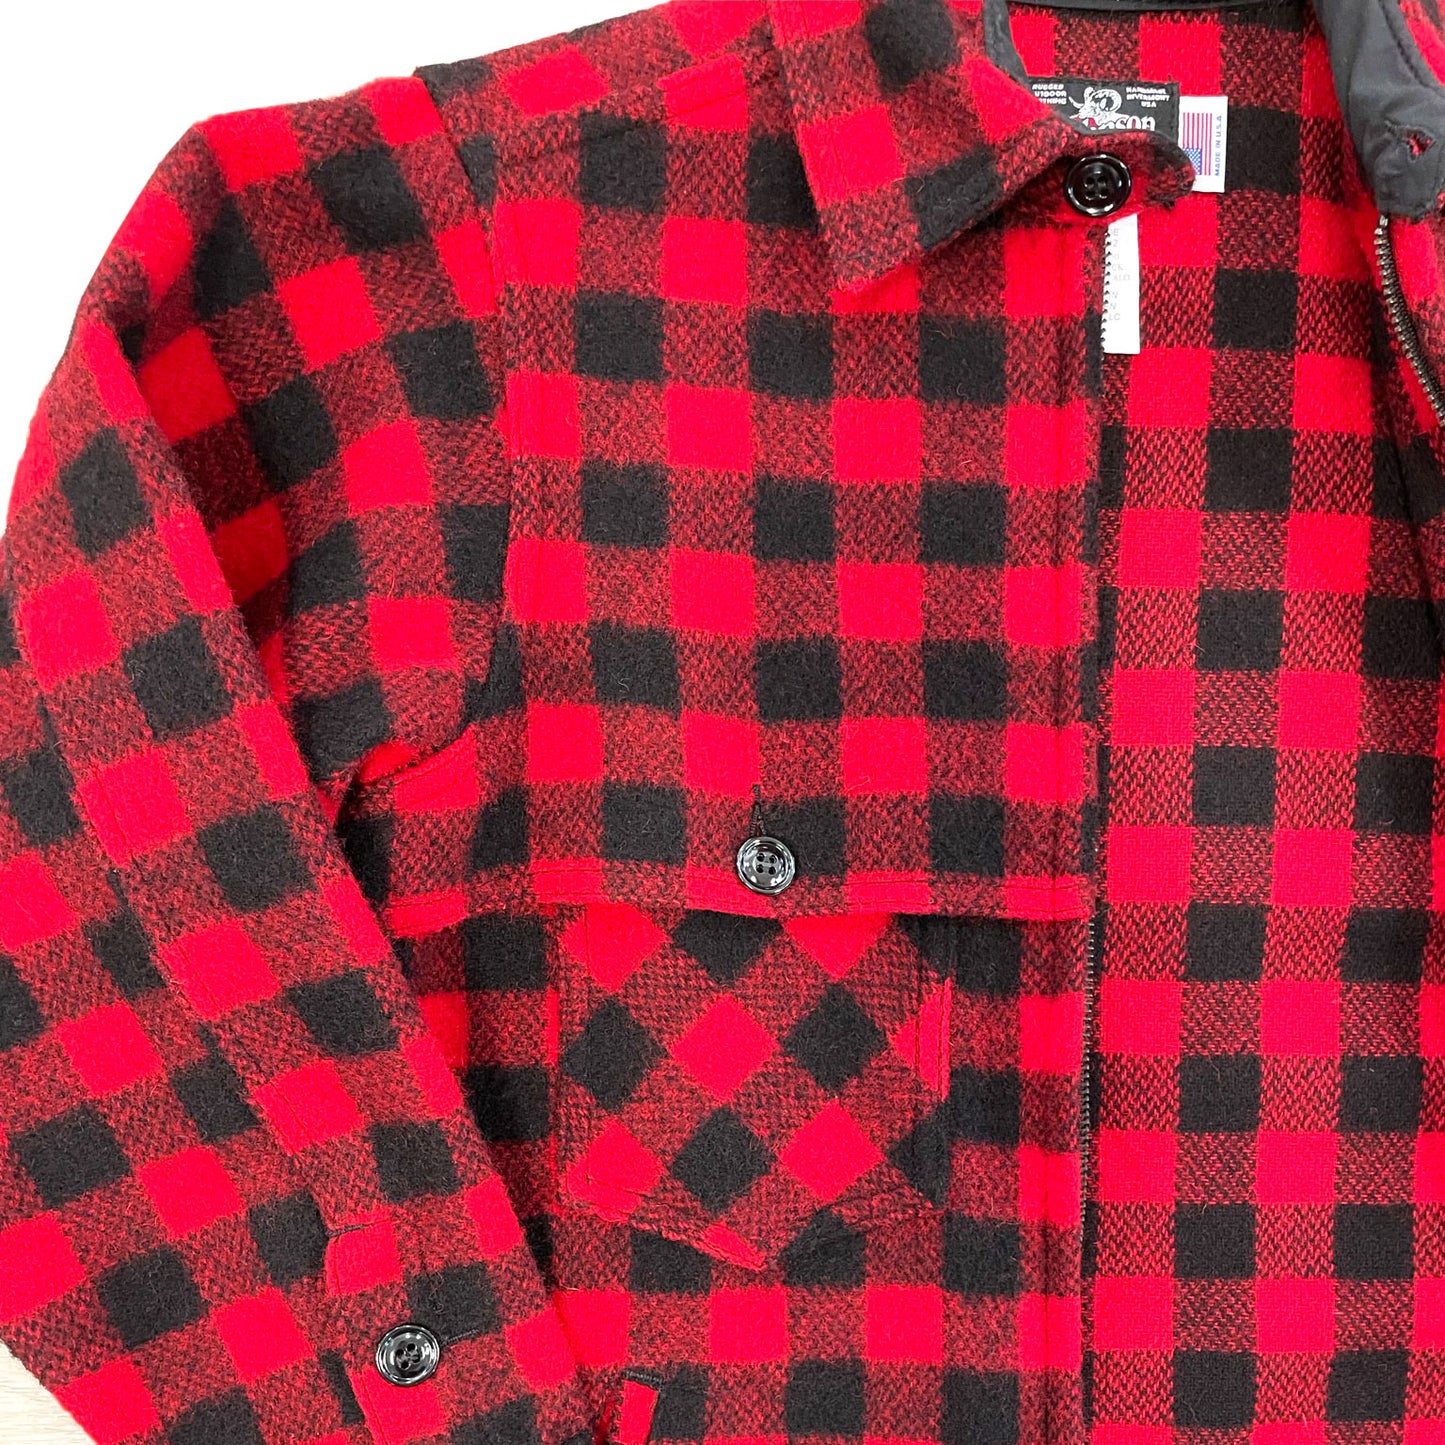 Johnson Woolen Mills Women's red and black buffalo check wool jac shirt pocket detail